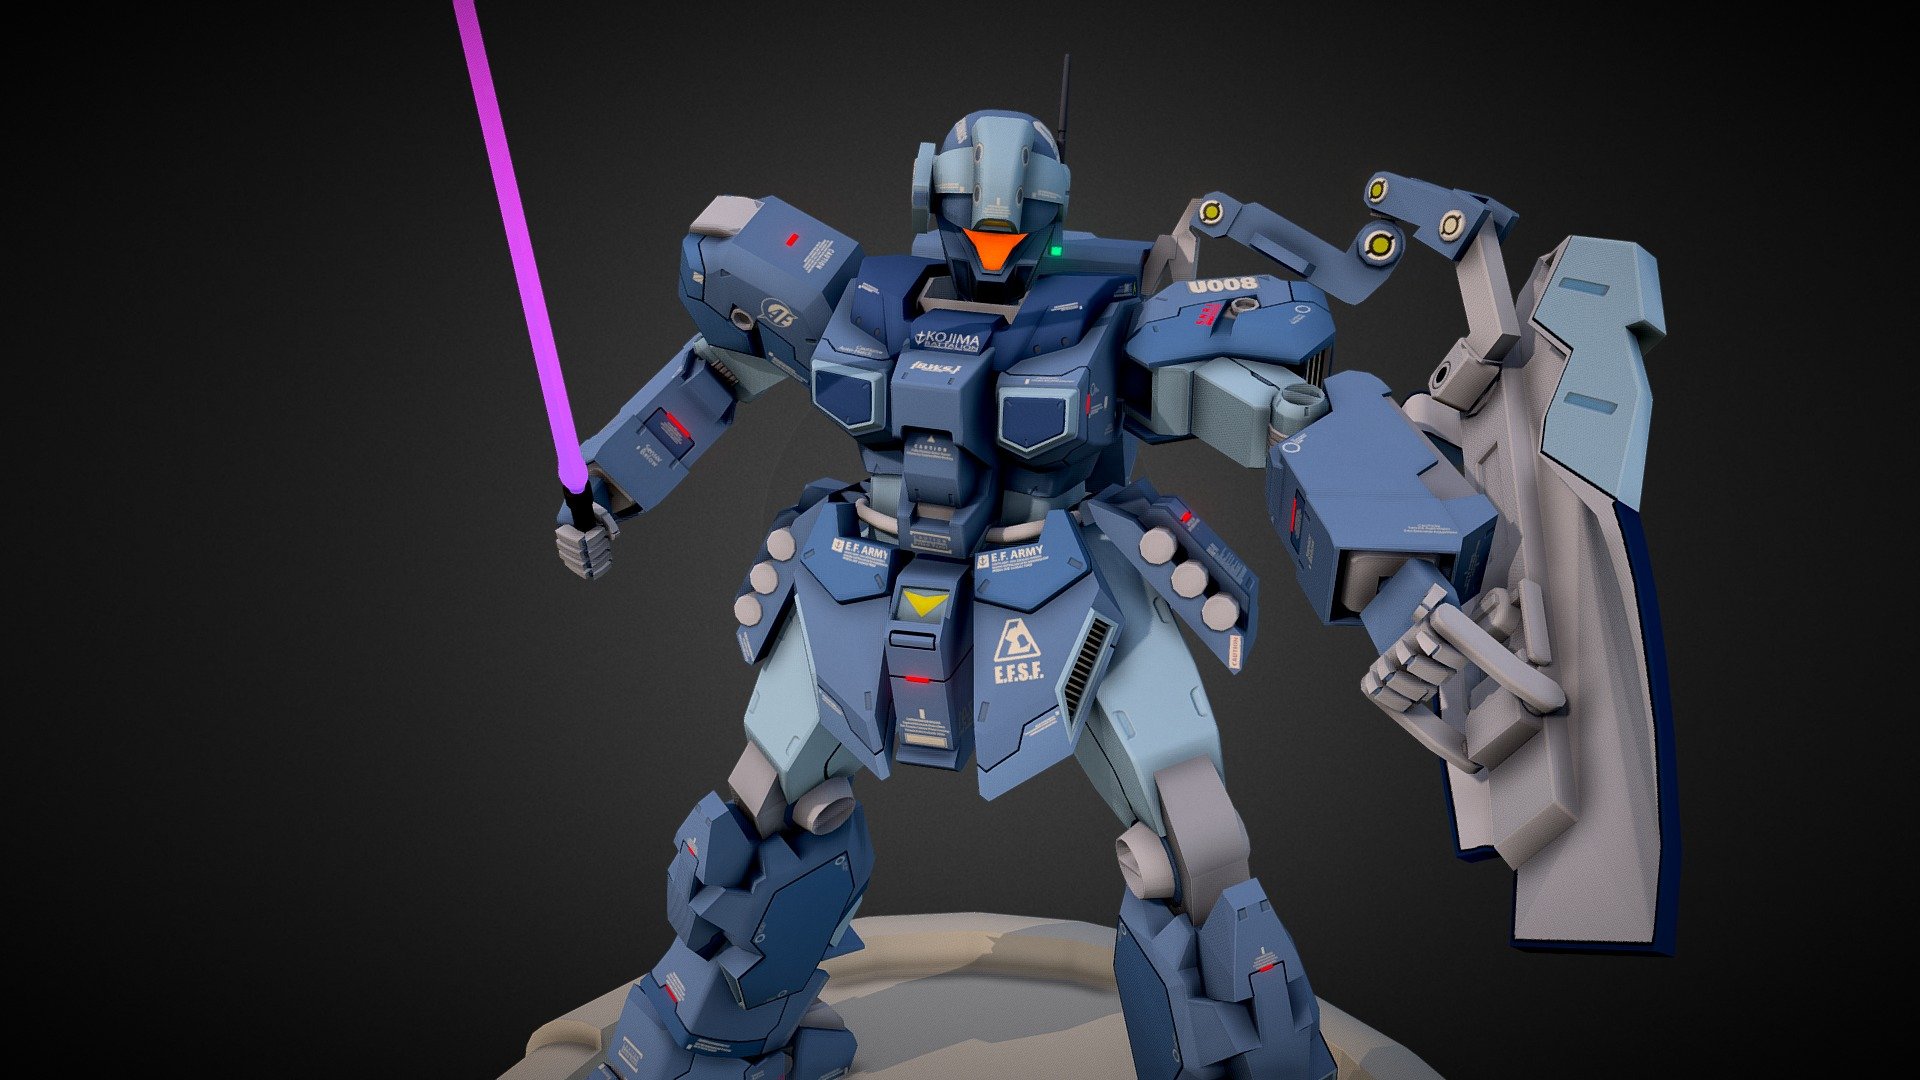 Gundam Model: 1/100 RGM-96X
modeled with Maya and texturized with Photoshop and xNormal
model weight: 16k
ArtStation:https://www.artstation.com/artwork/XBBBlR - GUNDAM 1/100 RGM-96X - Buy Royalty Free 3D model by cristian borra (@cris97) 3d model